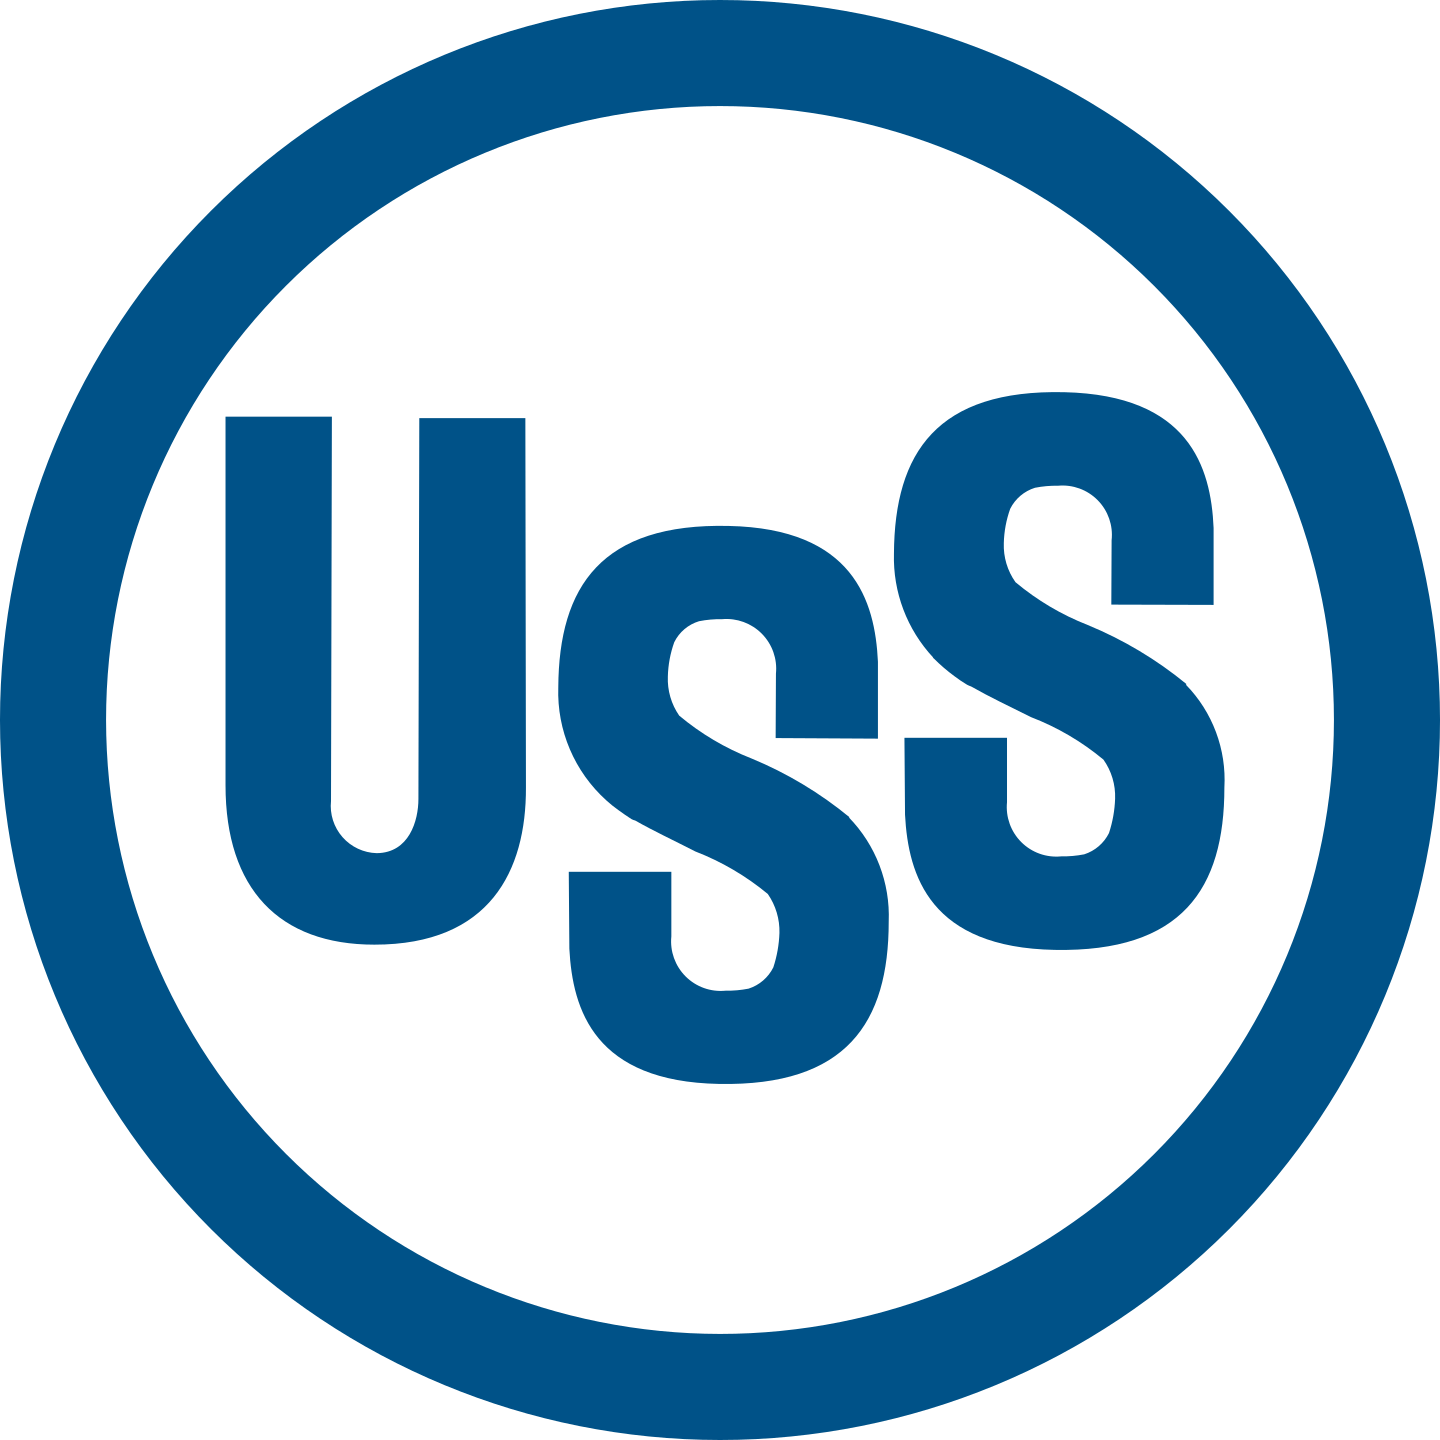 uss united states steel logo 3 - USS Logo - United States Steel Logo